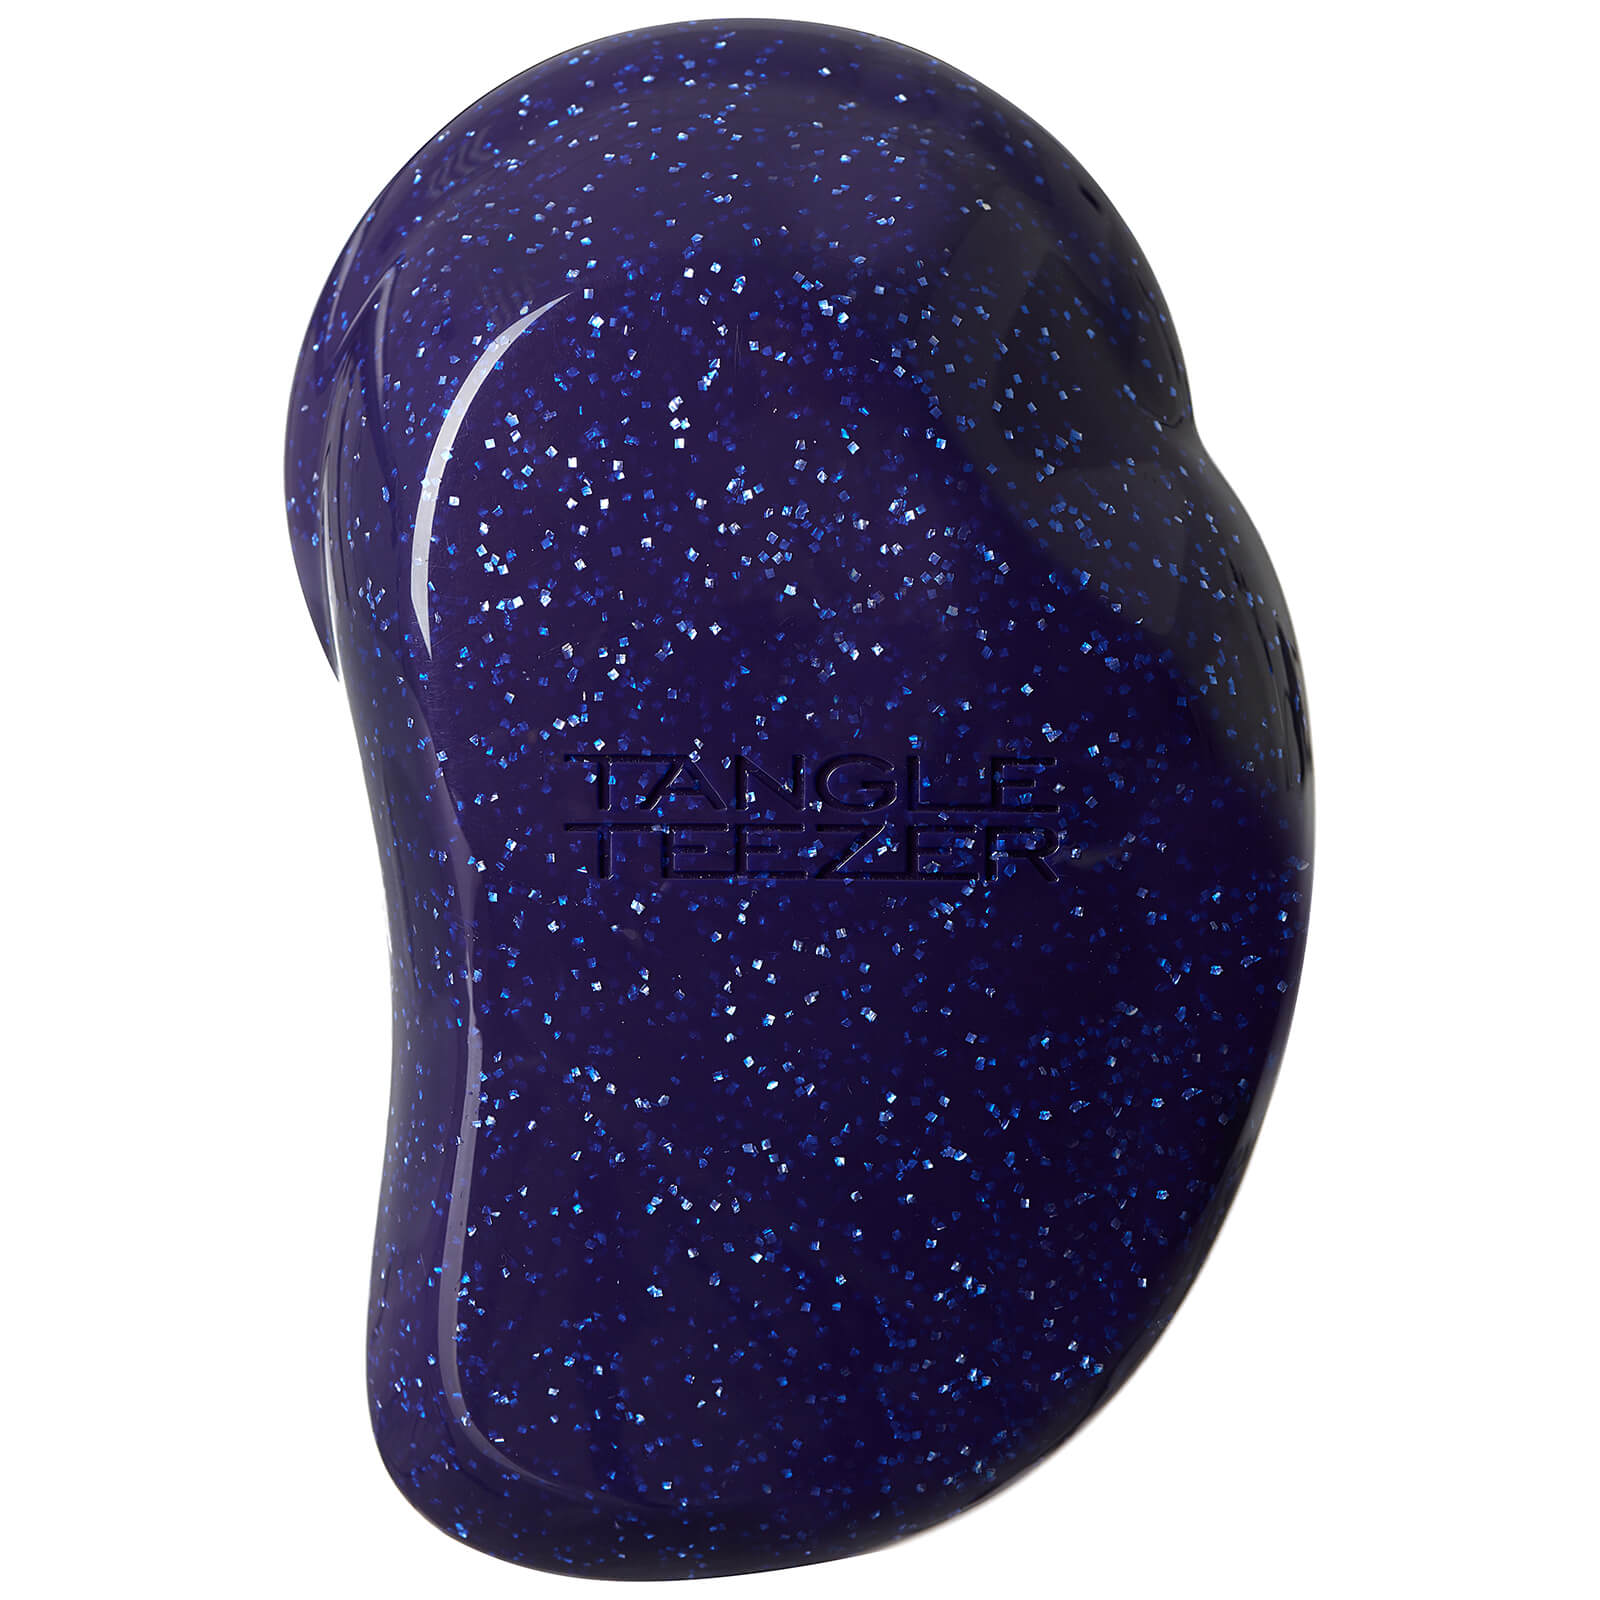 Cepillo para el pelo The Original Detangling de Tangle Teezer - Purple Glitter